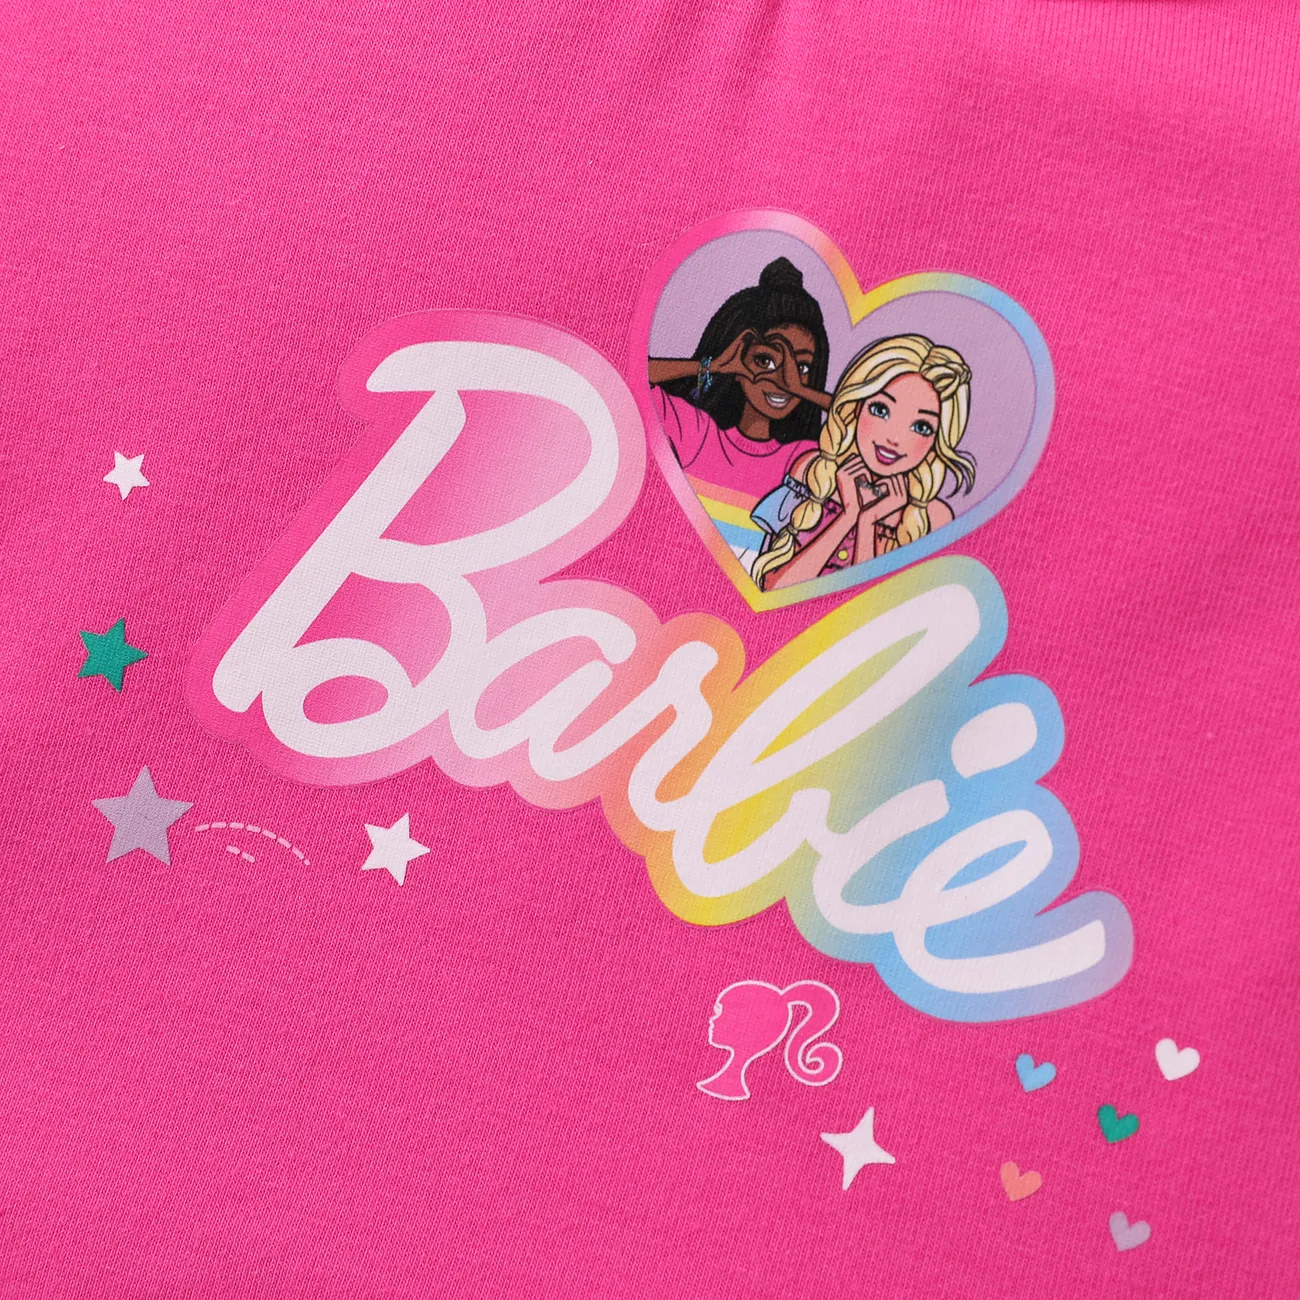 Barbie Fille Doux T-Shirt rose big image 1